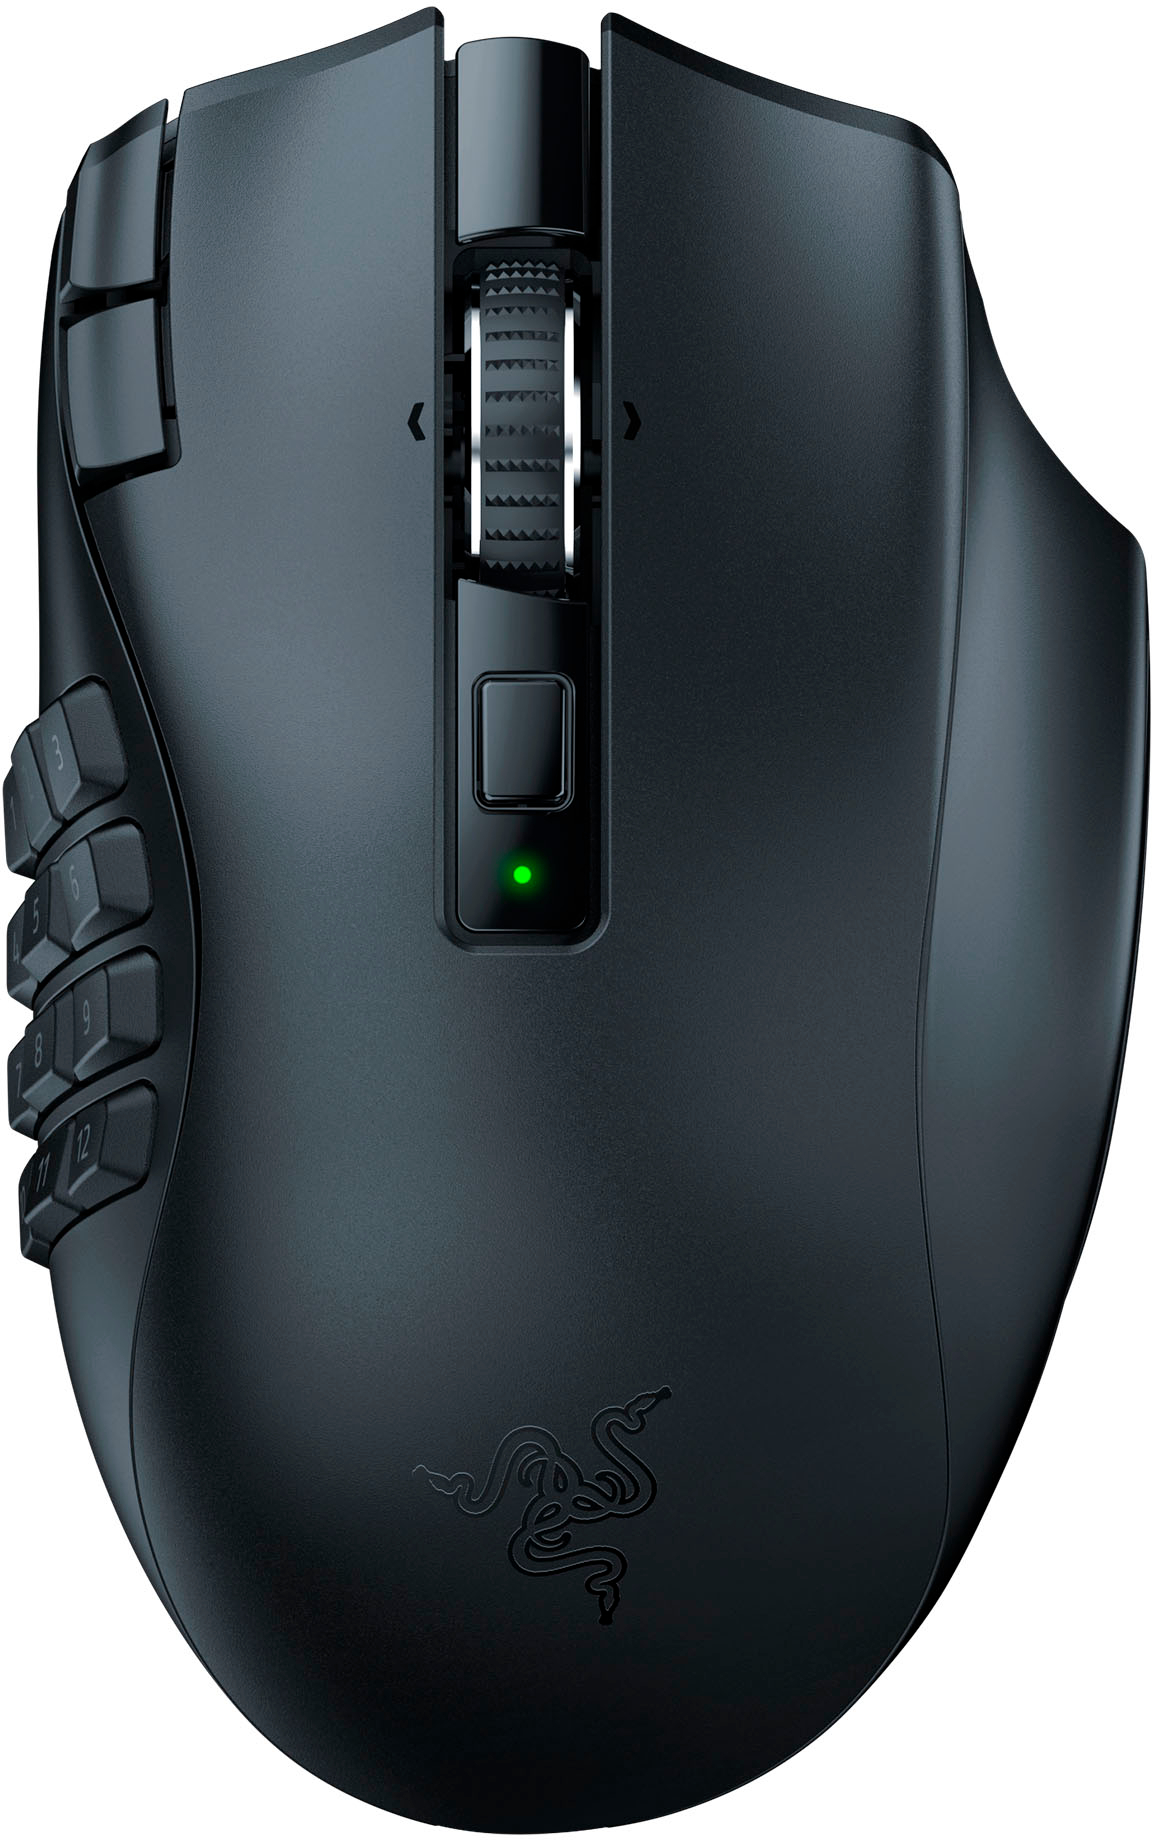 Razer Naga V2 Pro Gaming Mouse review: chopping and changing